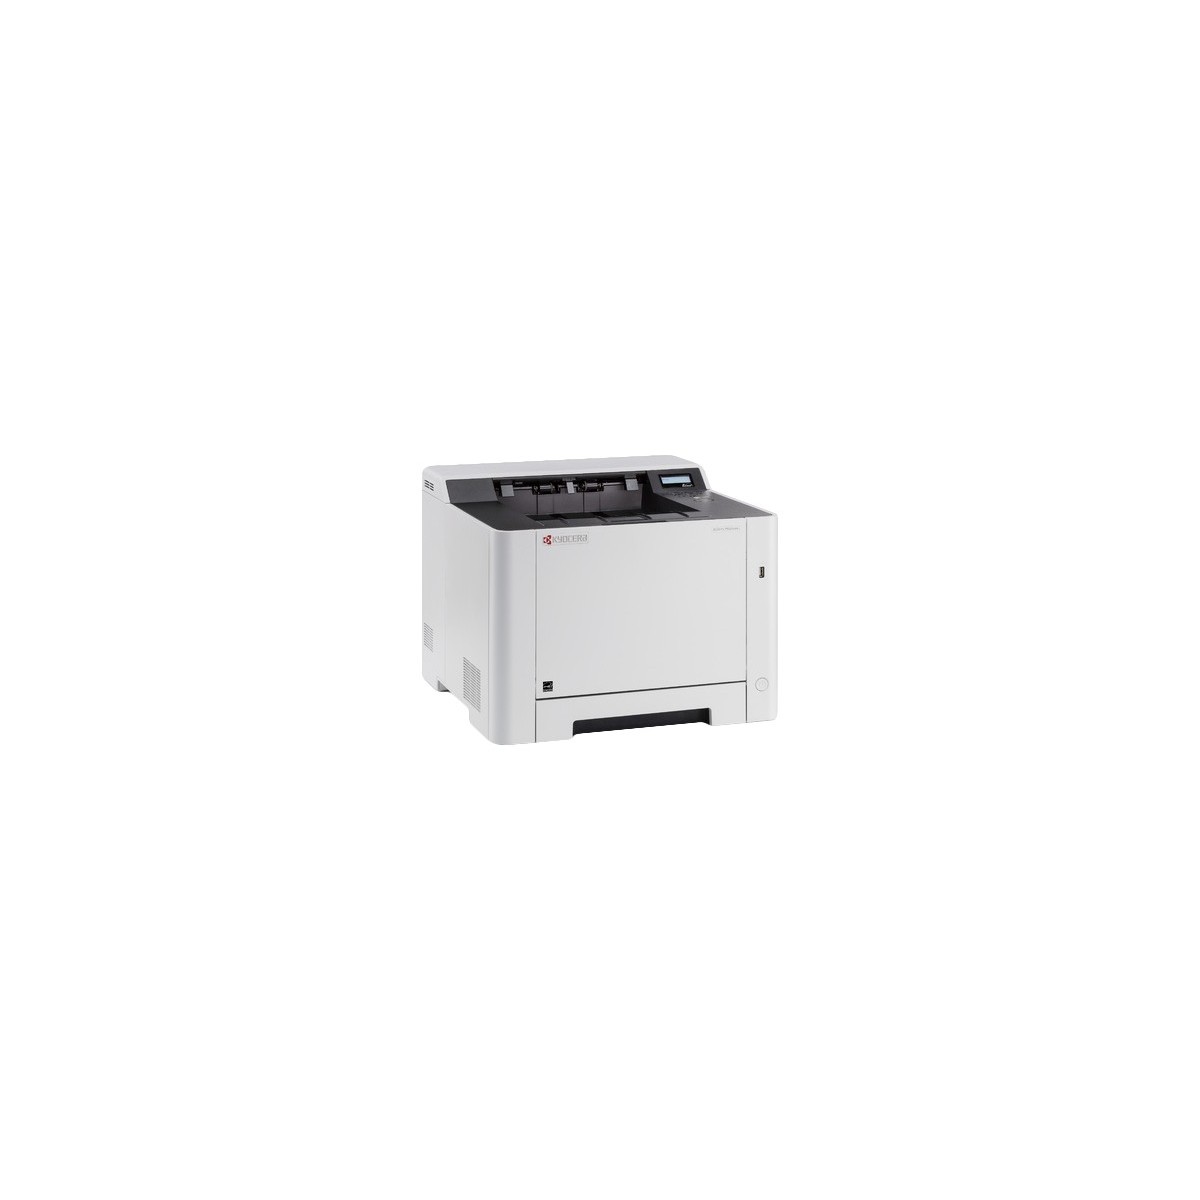 Kyocera ECOSYS P5021cdn/KL3 - Laser - Colour - 9600 x 600 DPI - A4 - 21 ppm - Duplex printing